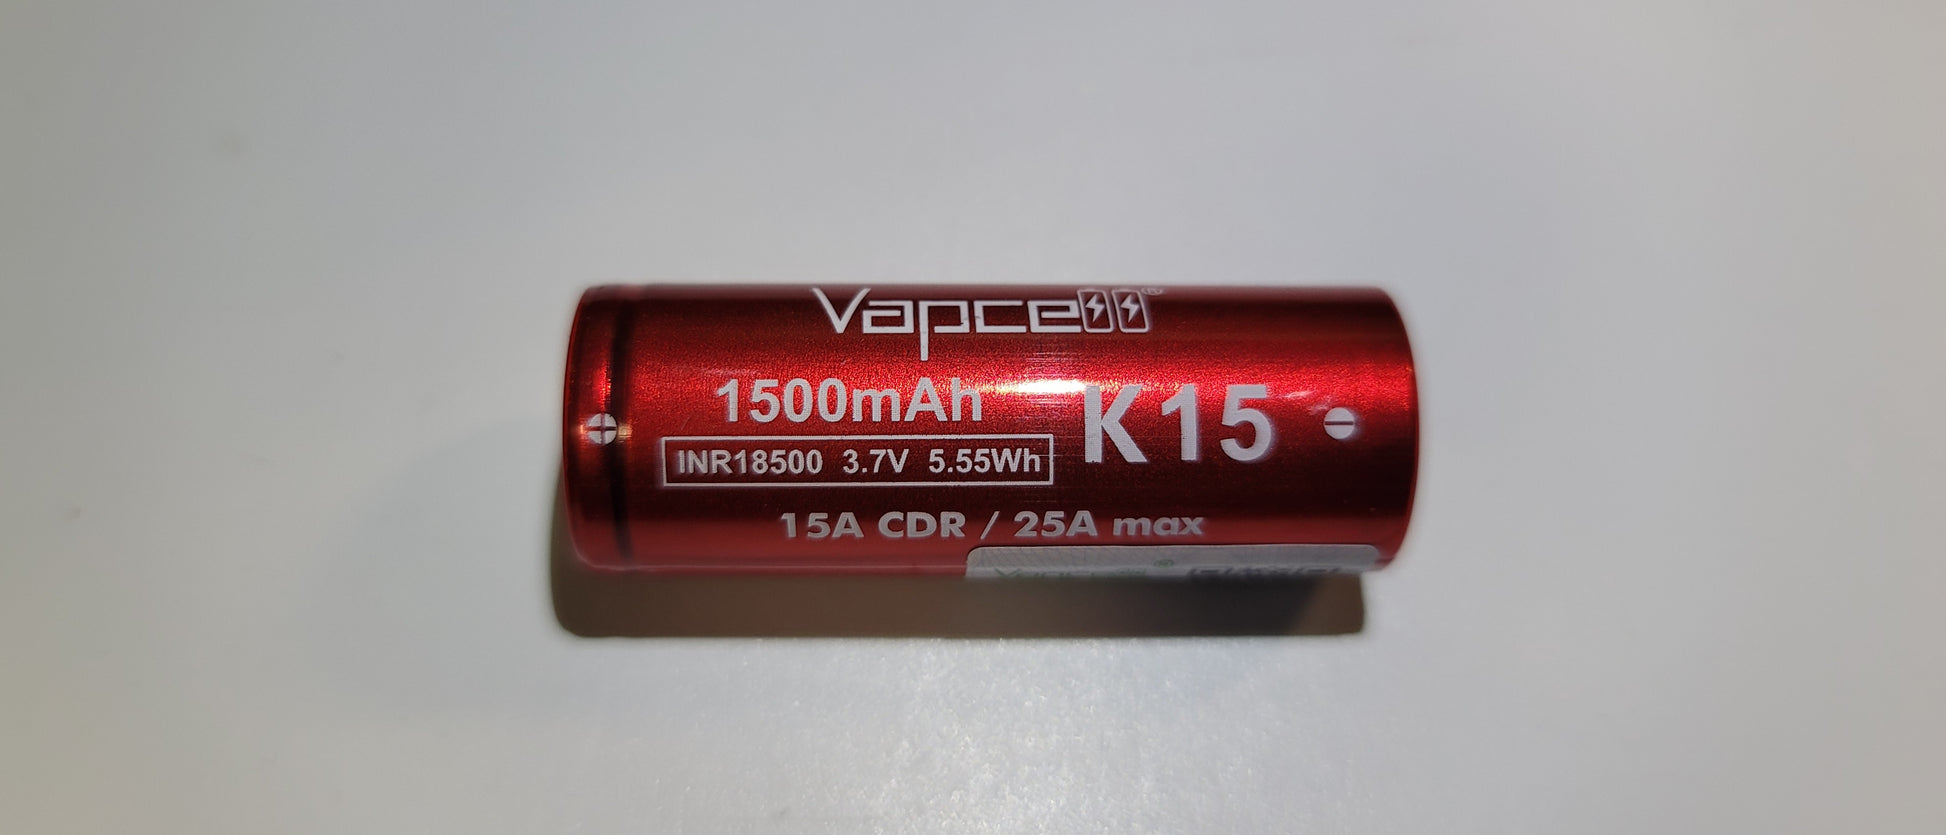 Vapcell K15 18500 1500mAh 15A Li-ion Rechargeable Battery